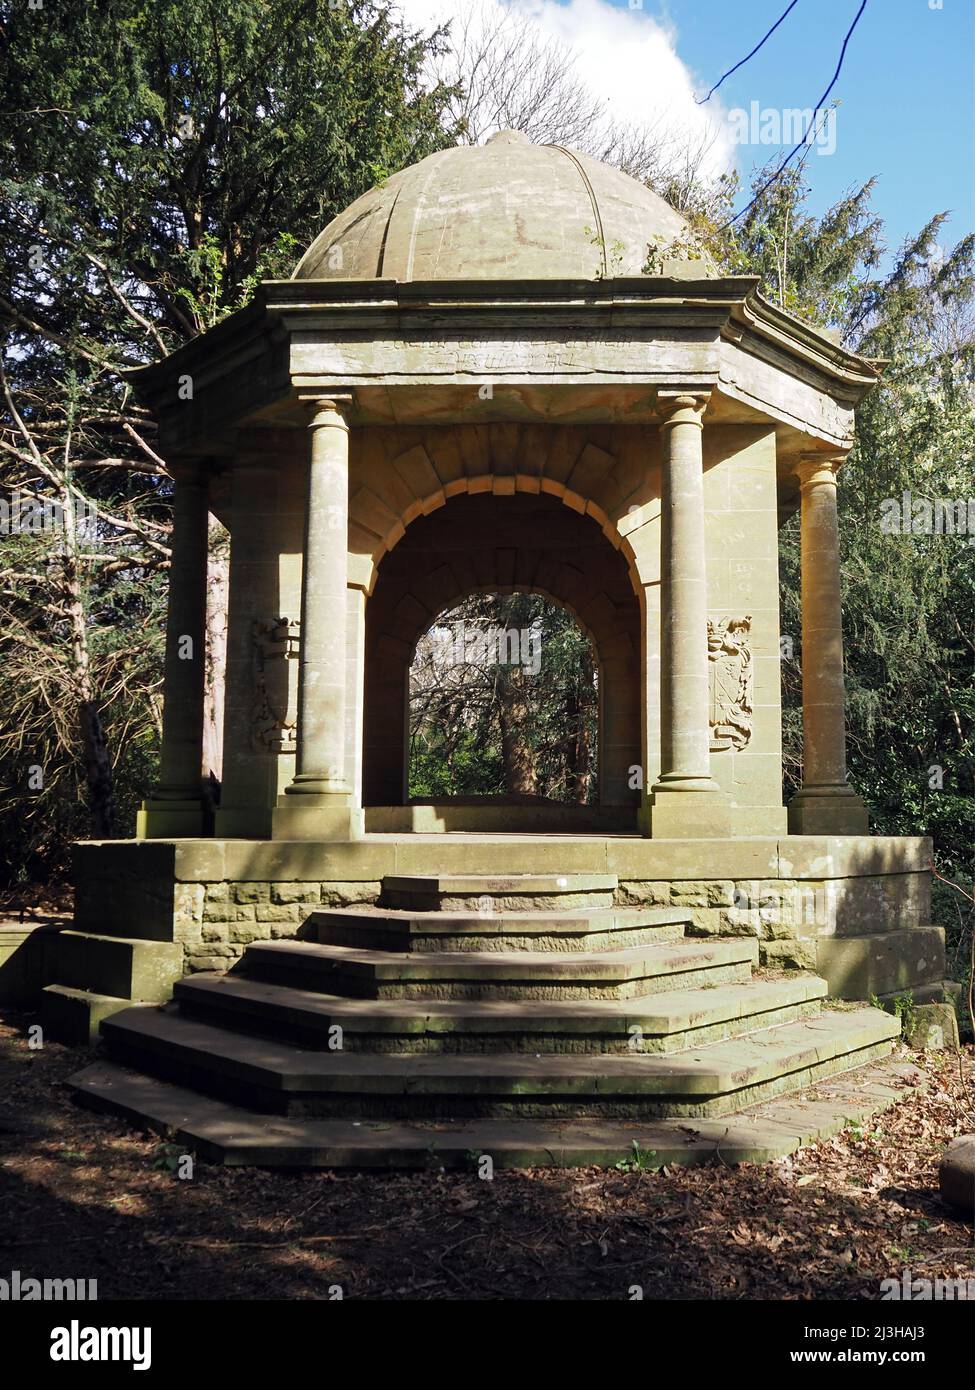 Sir Henry Samuelson Mausoleum 'Temple of sleep' Wisley and Ockham Common, Chatley Heath, Surrey, UK. Stock Photo